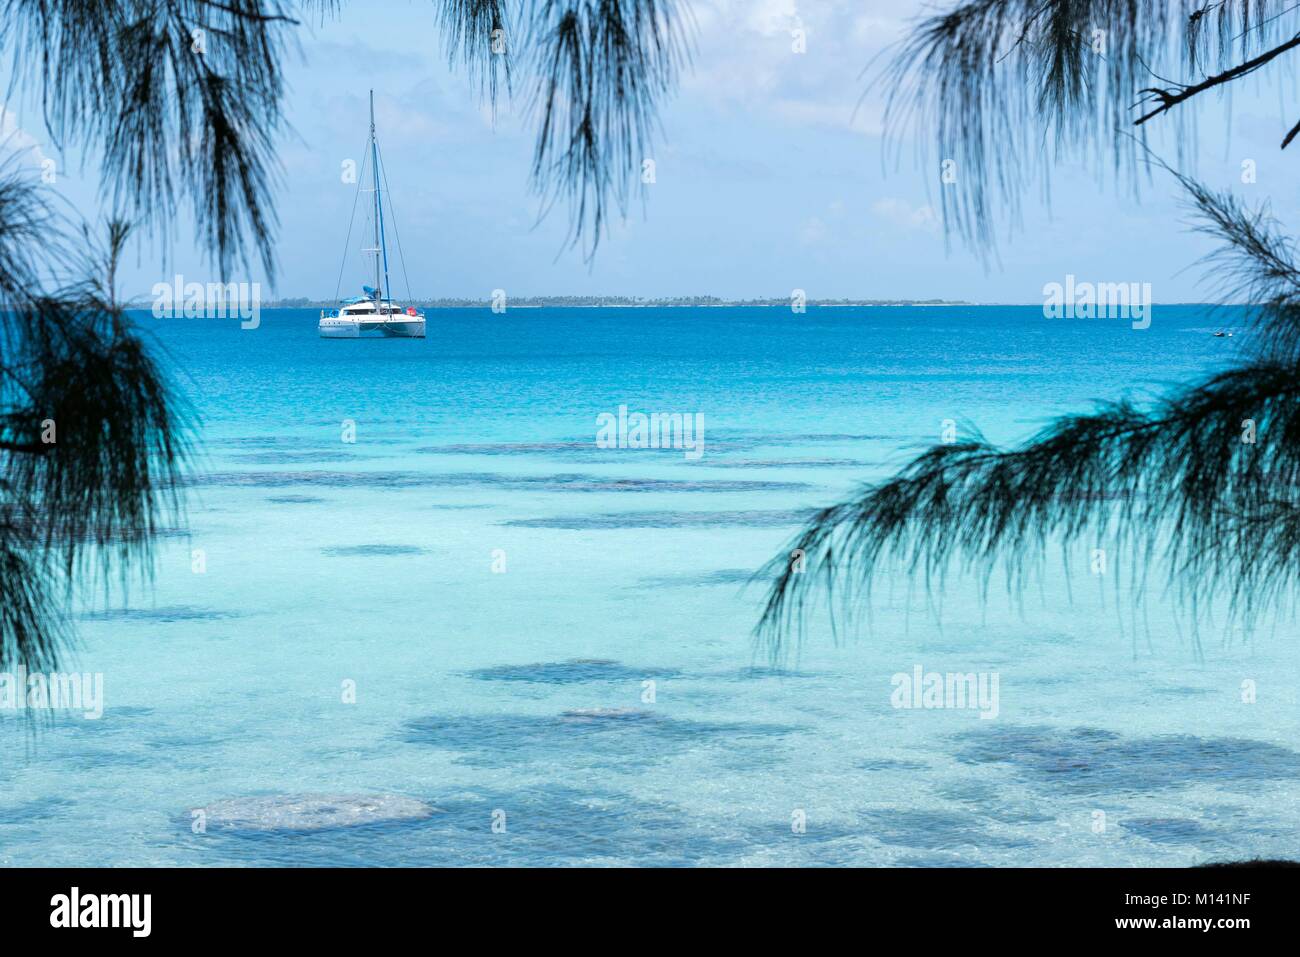 France, French Polynesia, Tuamotu Archipelago, Fakarava Atoll, Rotoava, UNESCO Biosphere Reserve, catamaran anchored in the lagoon Stock Photo